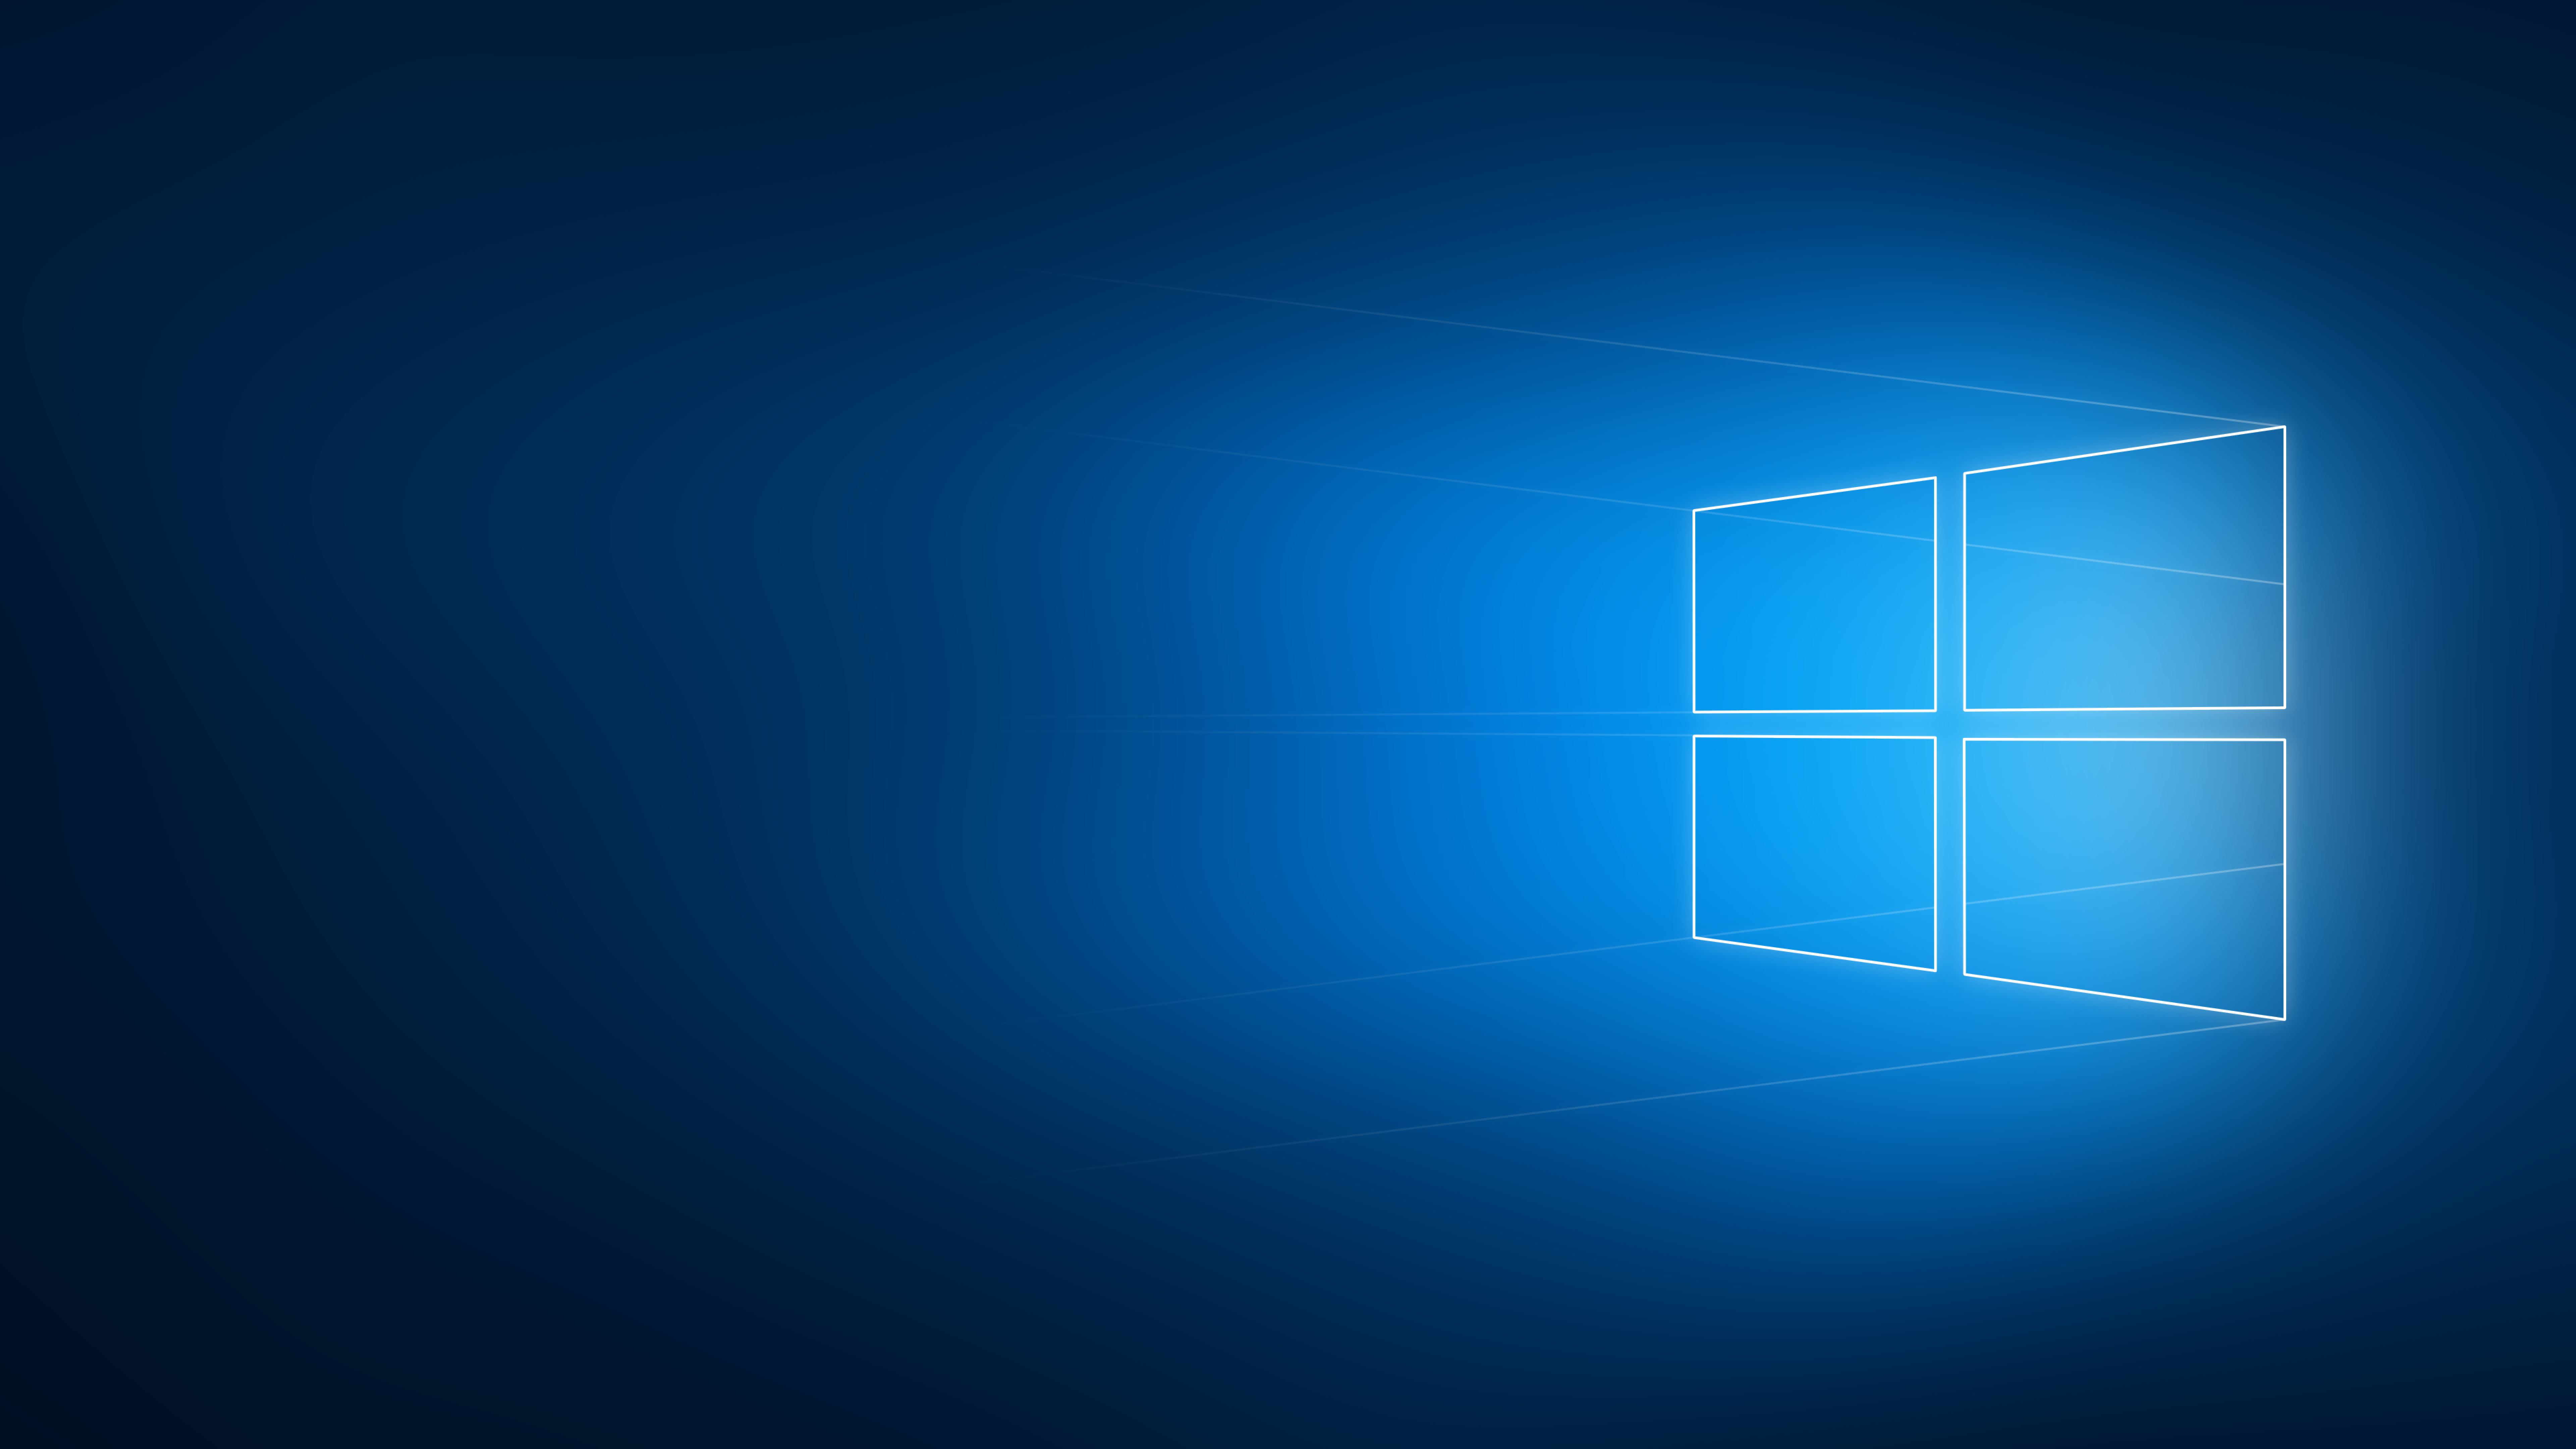 7680x4320 Windows 10 Hero Logo 8K Wallpaper, HD Brands 4K Wallpapers,  Images, Photos and Background - Wallpapers Den